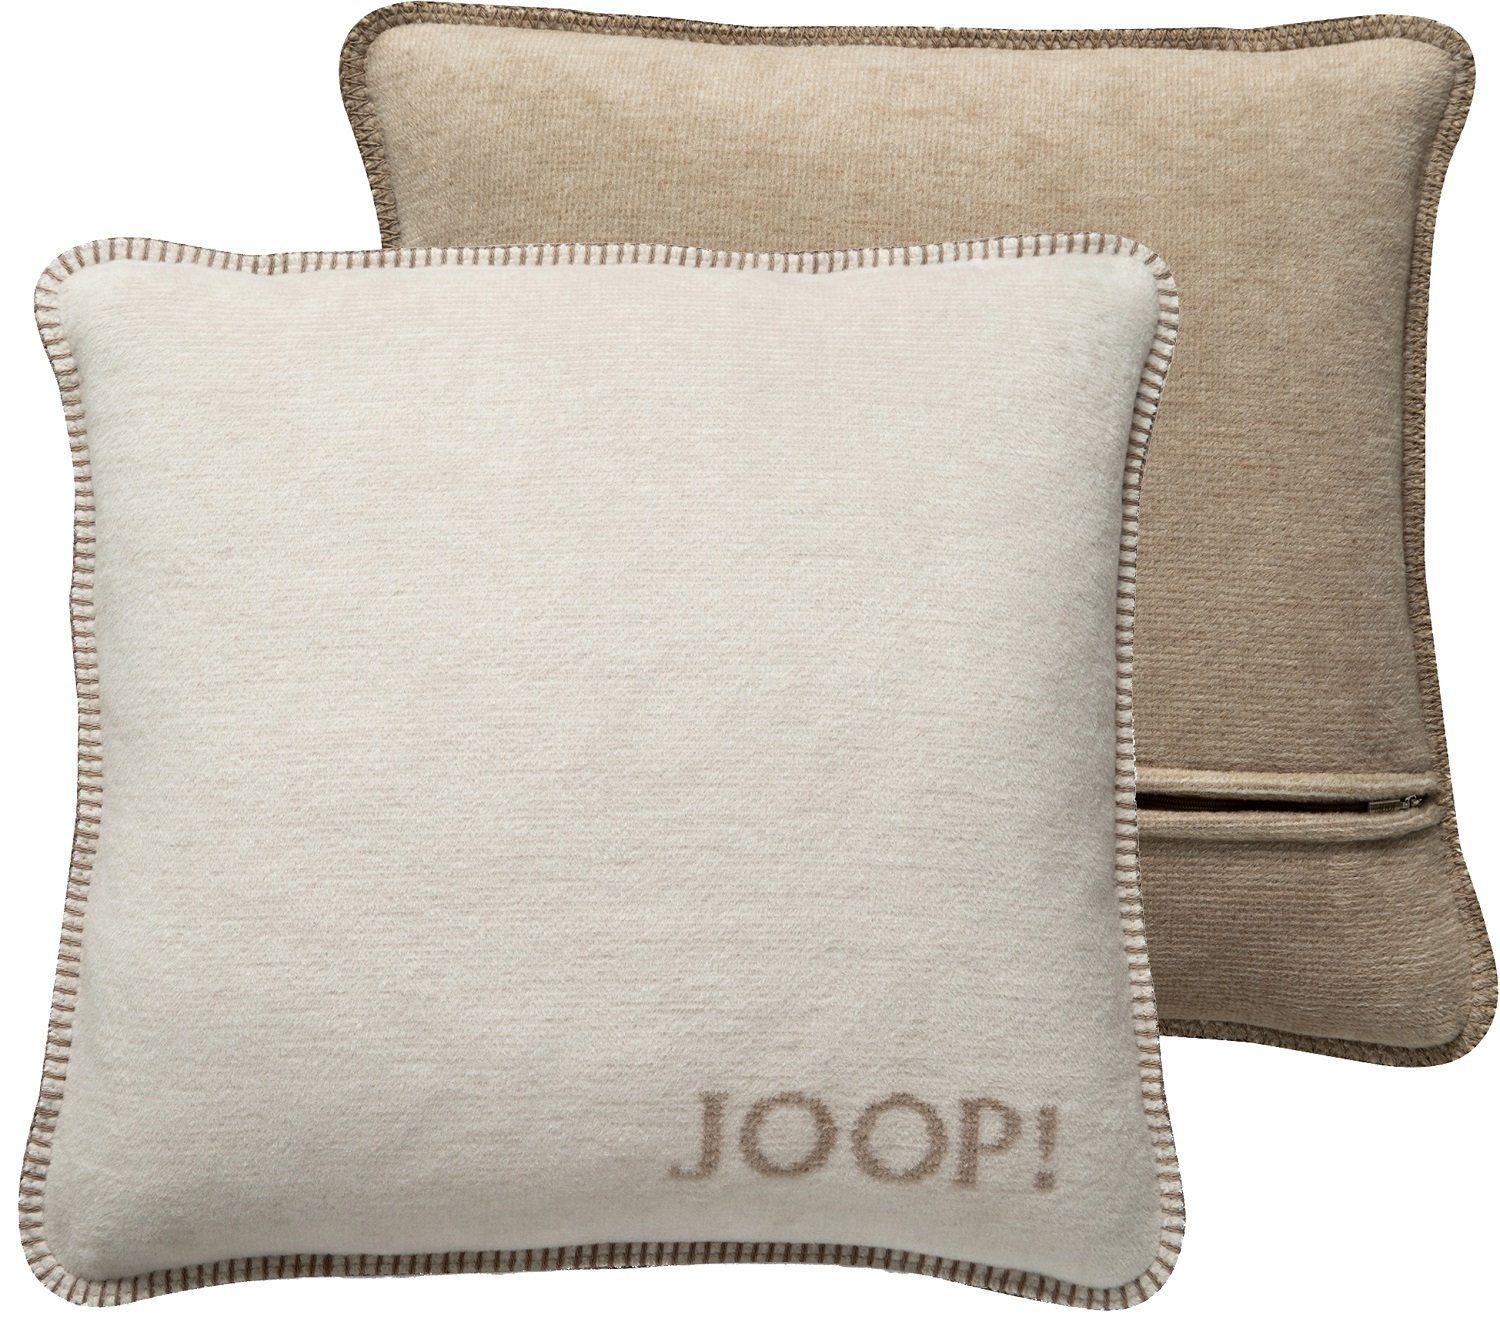 JOOP! Melange Baumwollmischung Kissenbezug weiche Optik, Doubleface Joop!, 50x50 Melange cm, Kissenhülle Natur-Sand